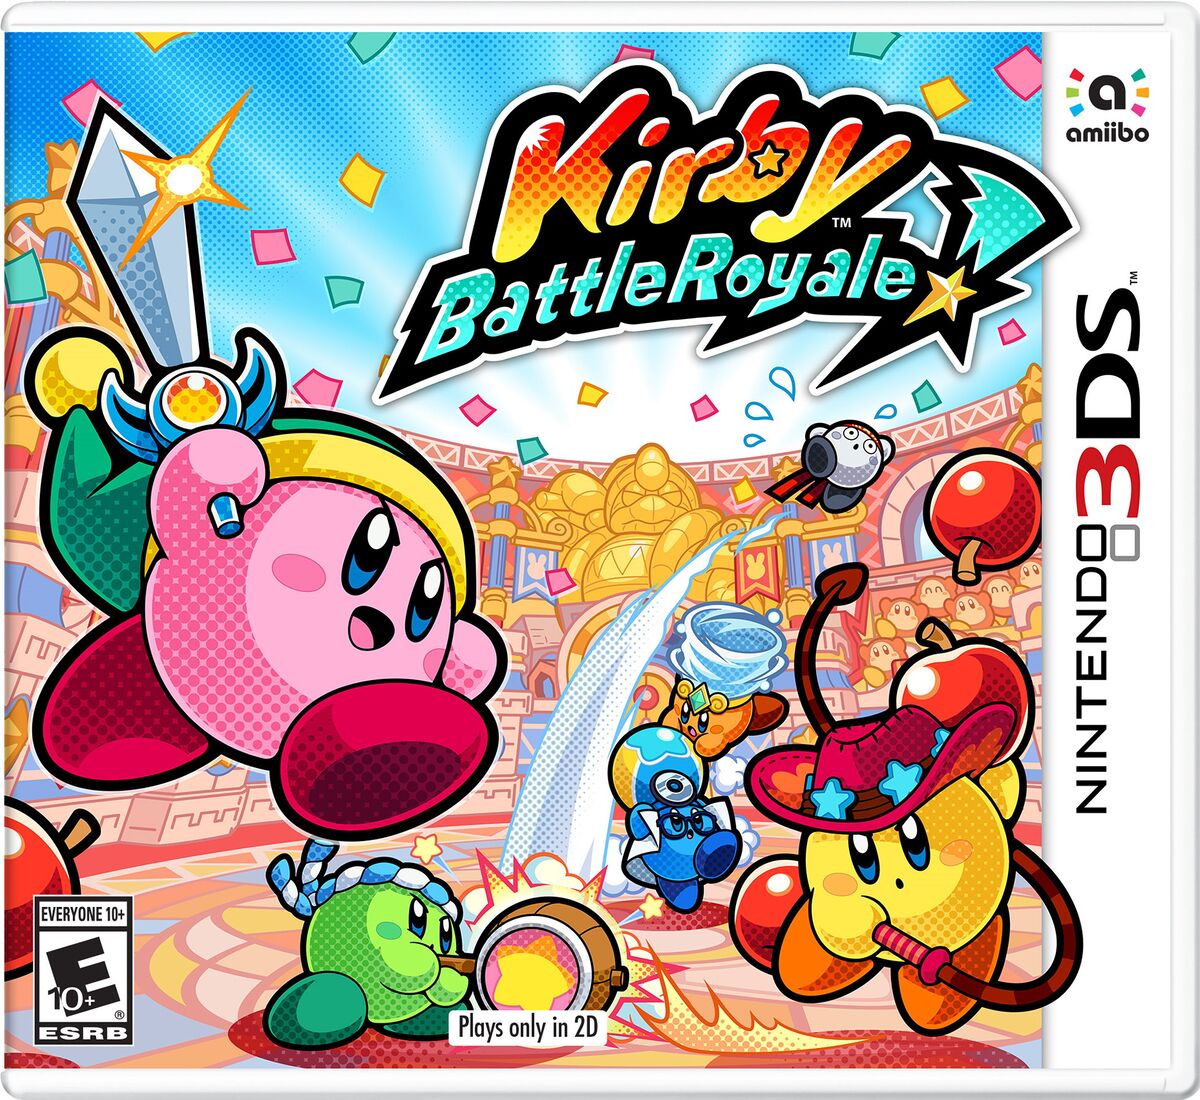 Ninja - WiKirby: it's a wiki, about Kirby!